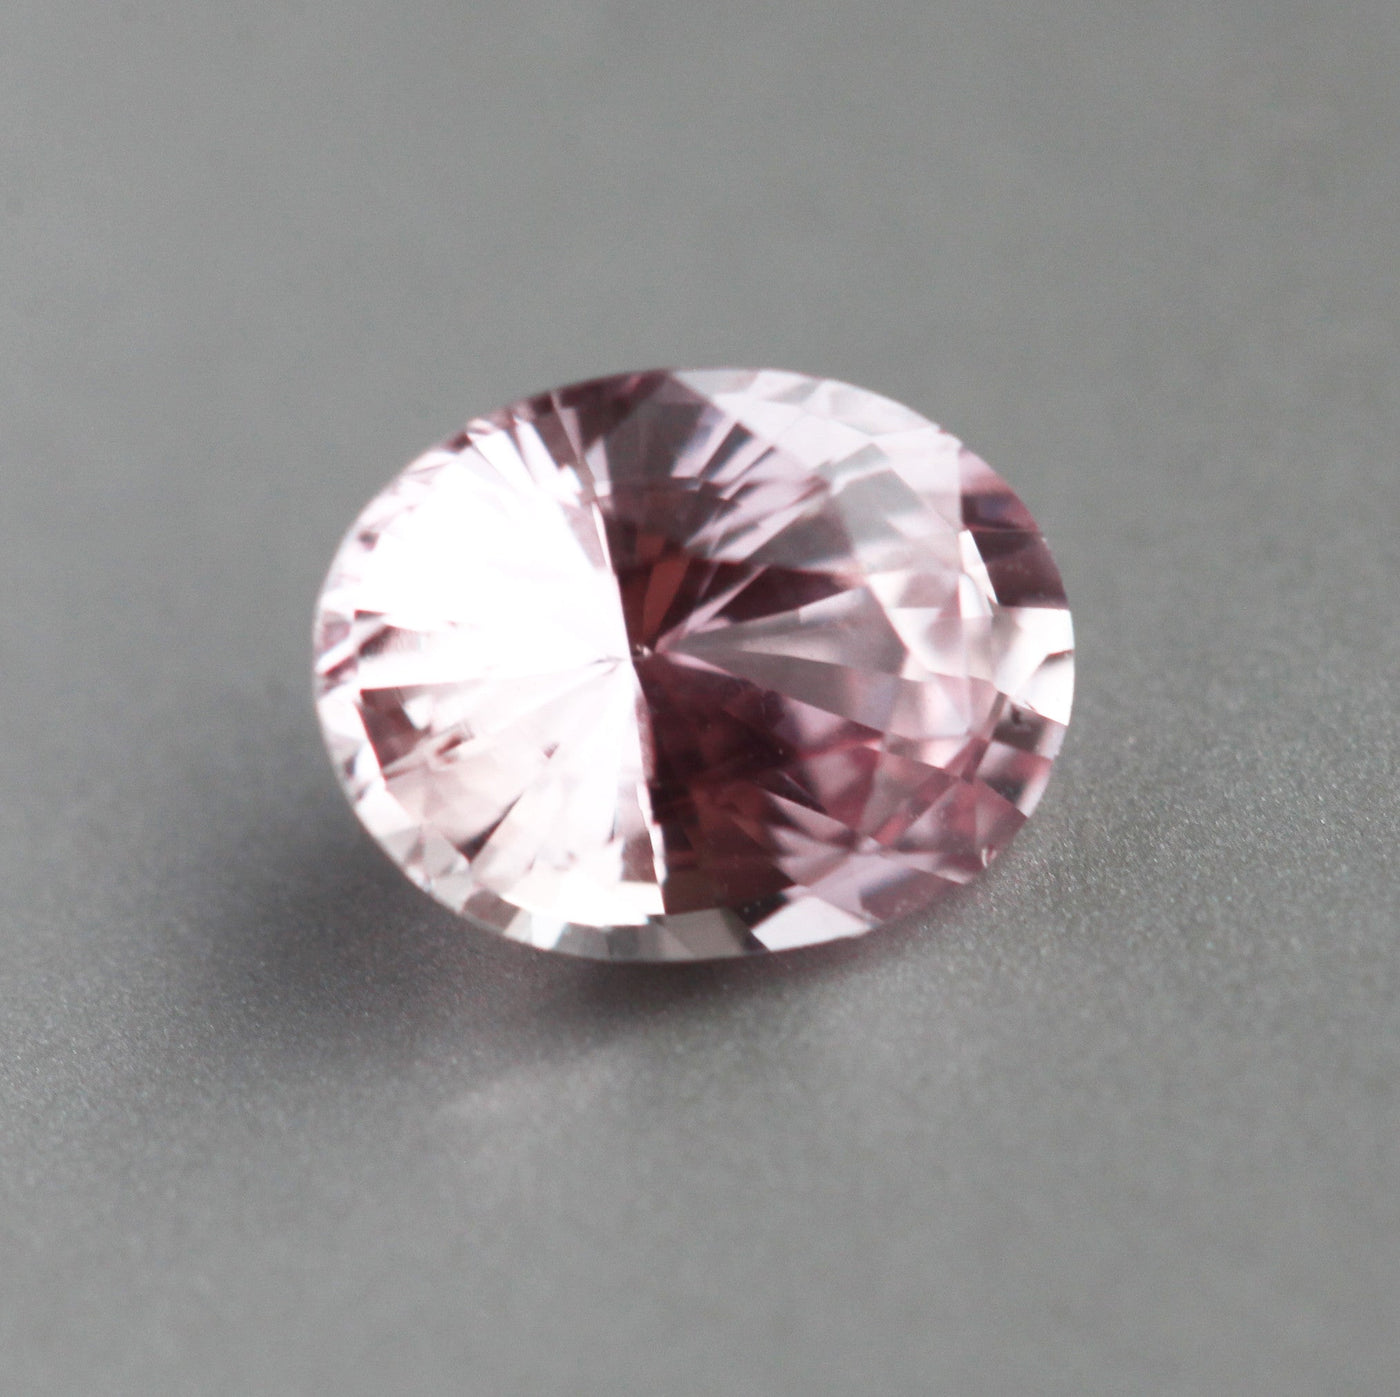 Loose oval-shaped pink orange sapphire